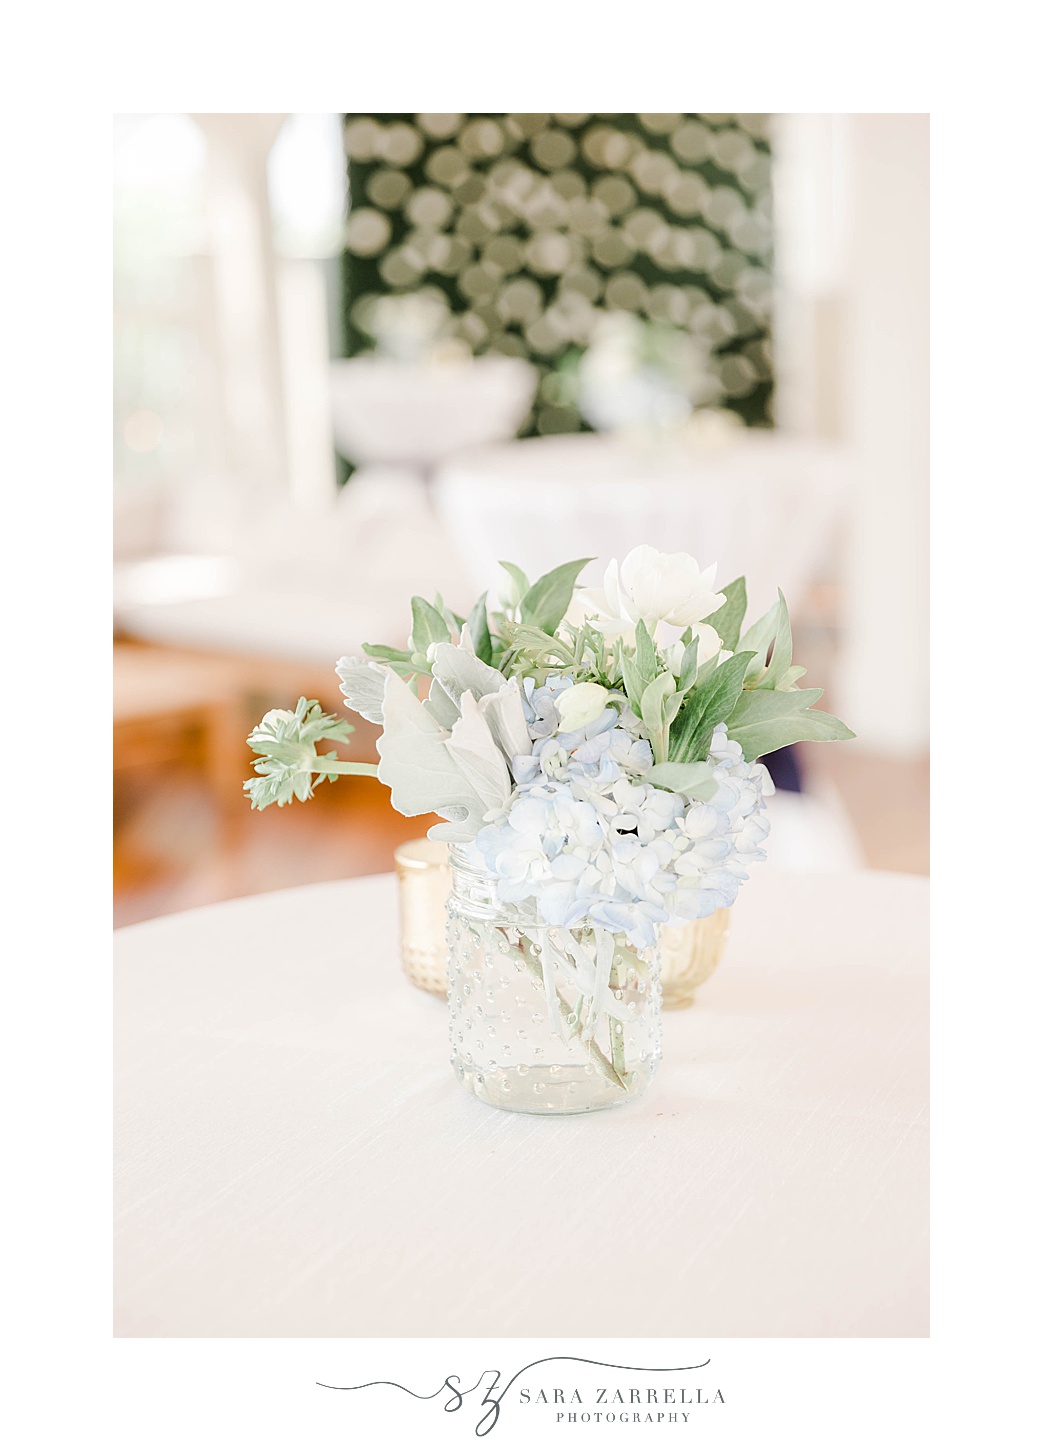 Regatta Place wedding with blue floral details